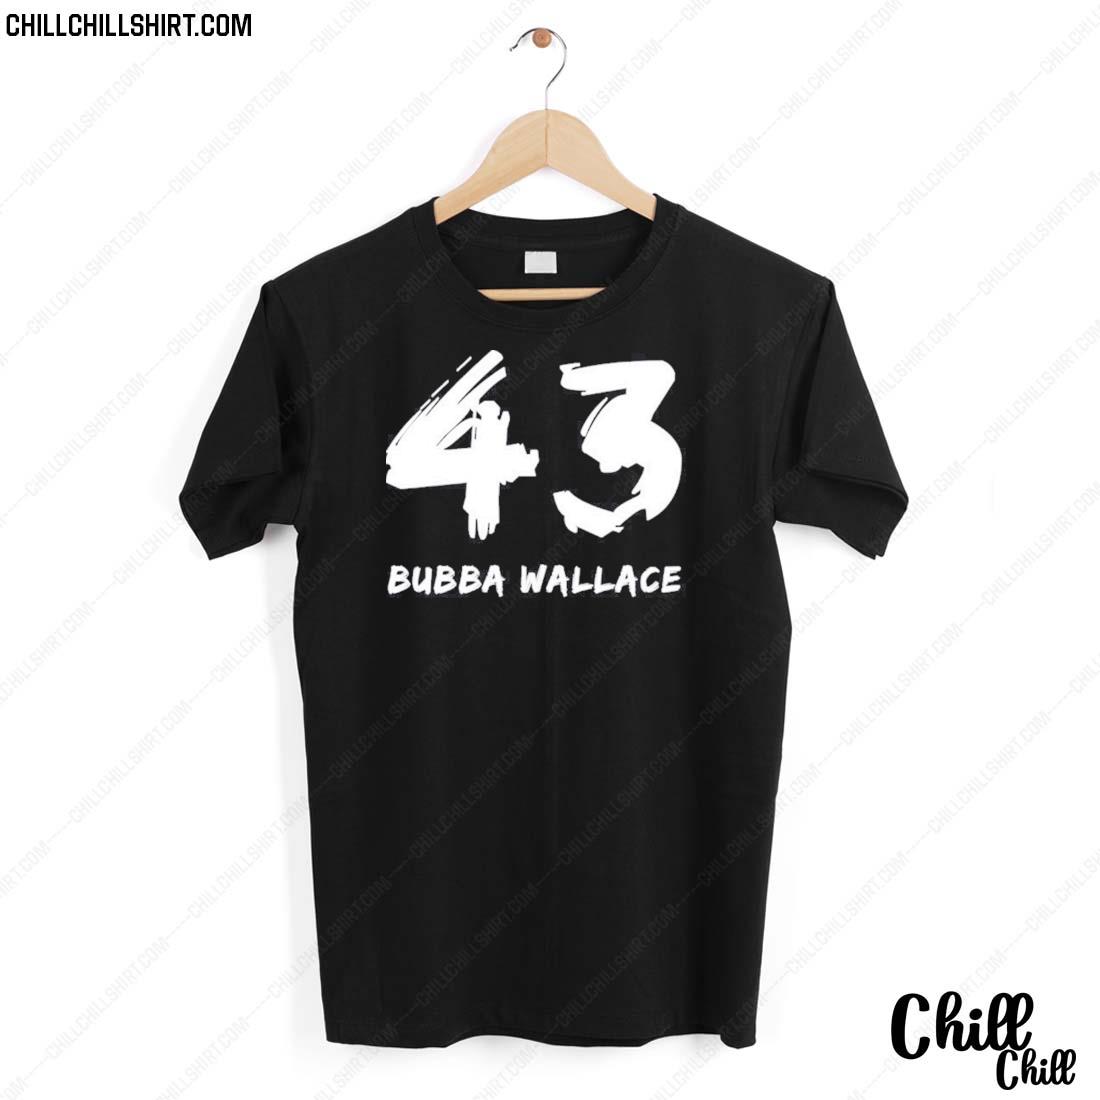 Nice bubba Wallace T-shirt